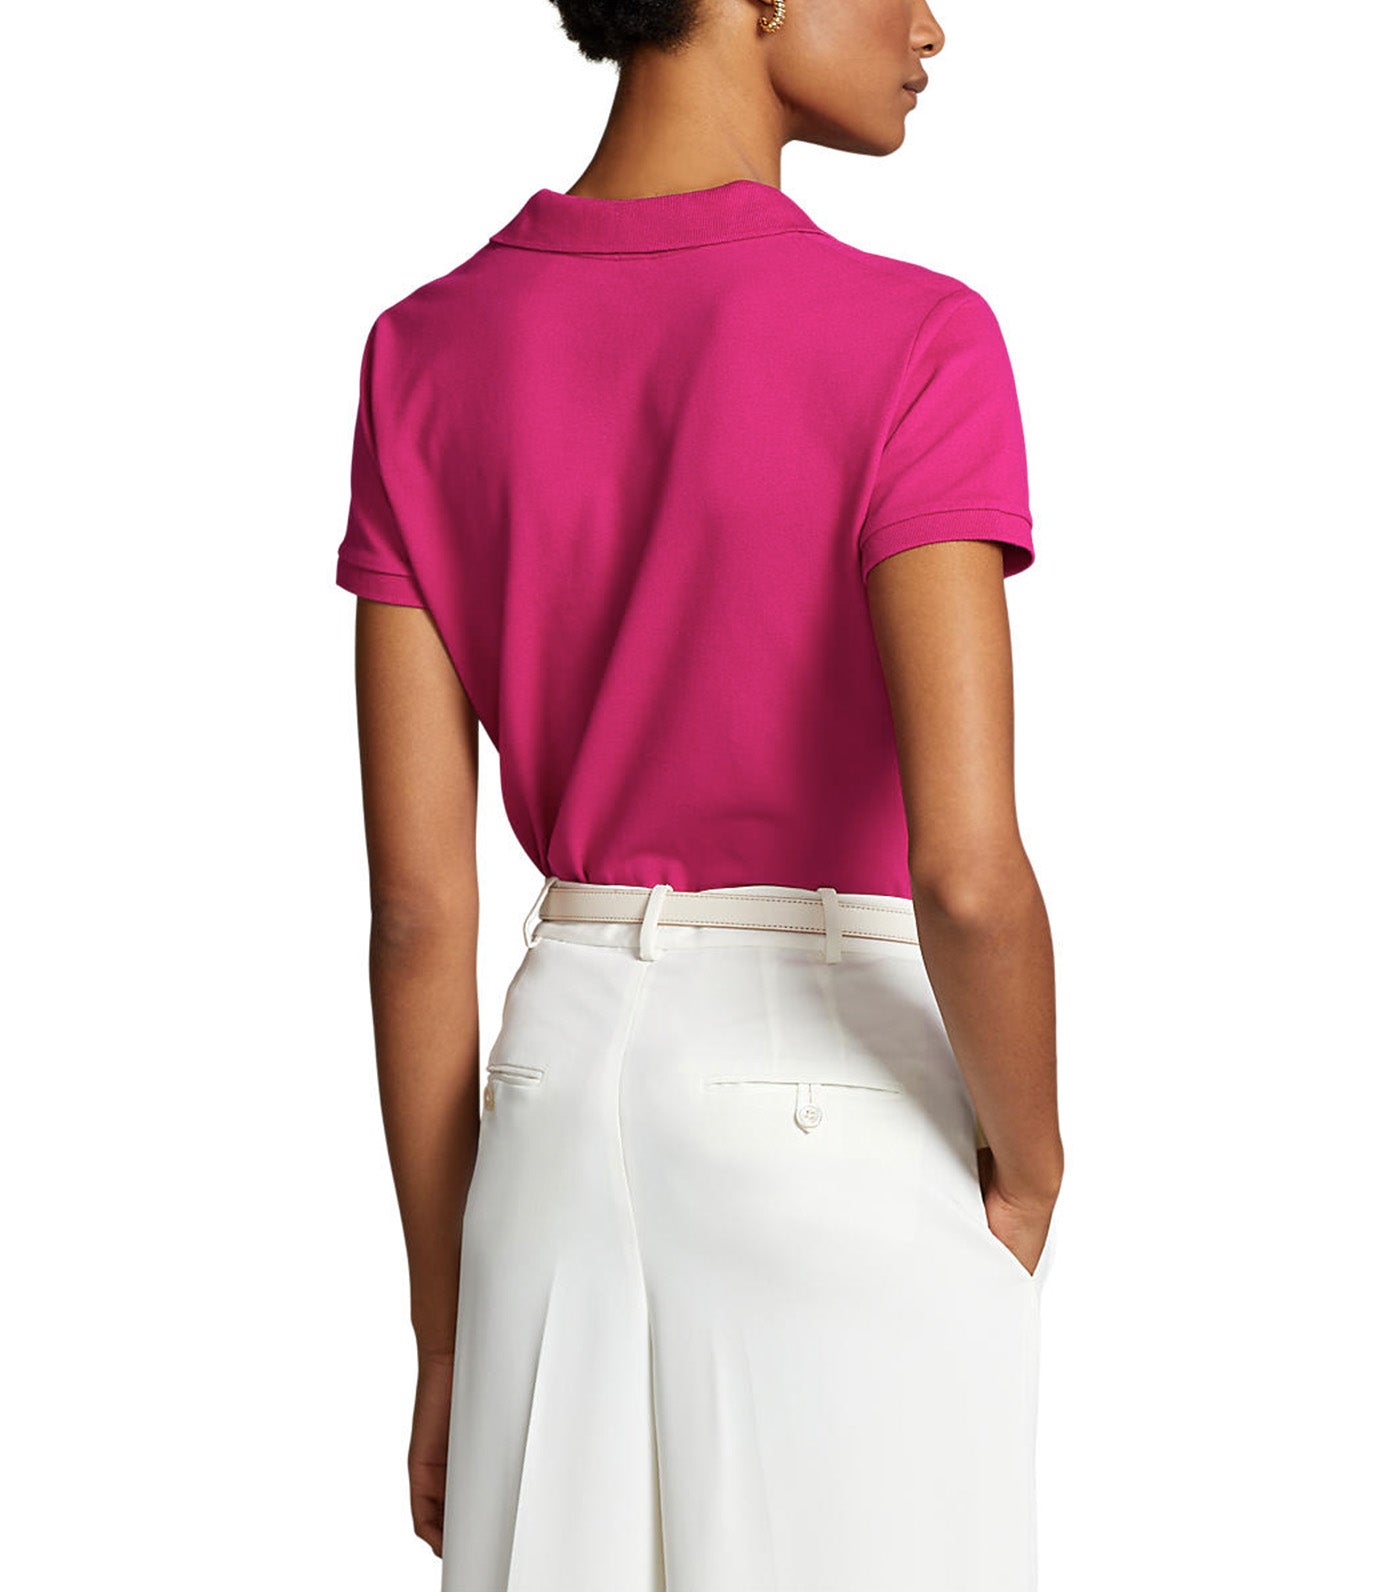 Women's Slim Fit Stretch Polo Shirt Pink Sky